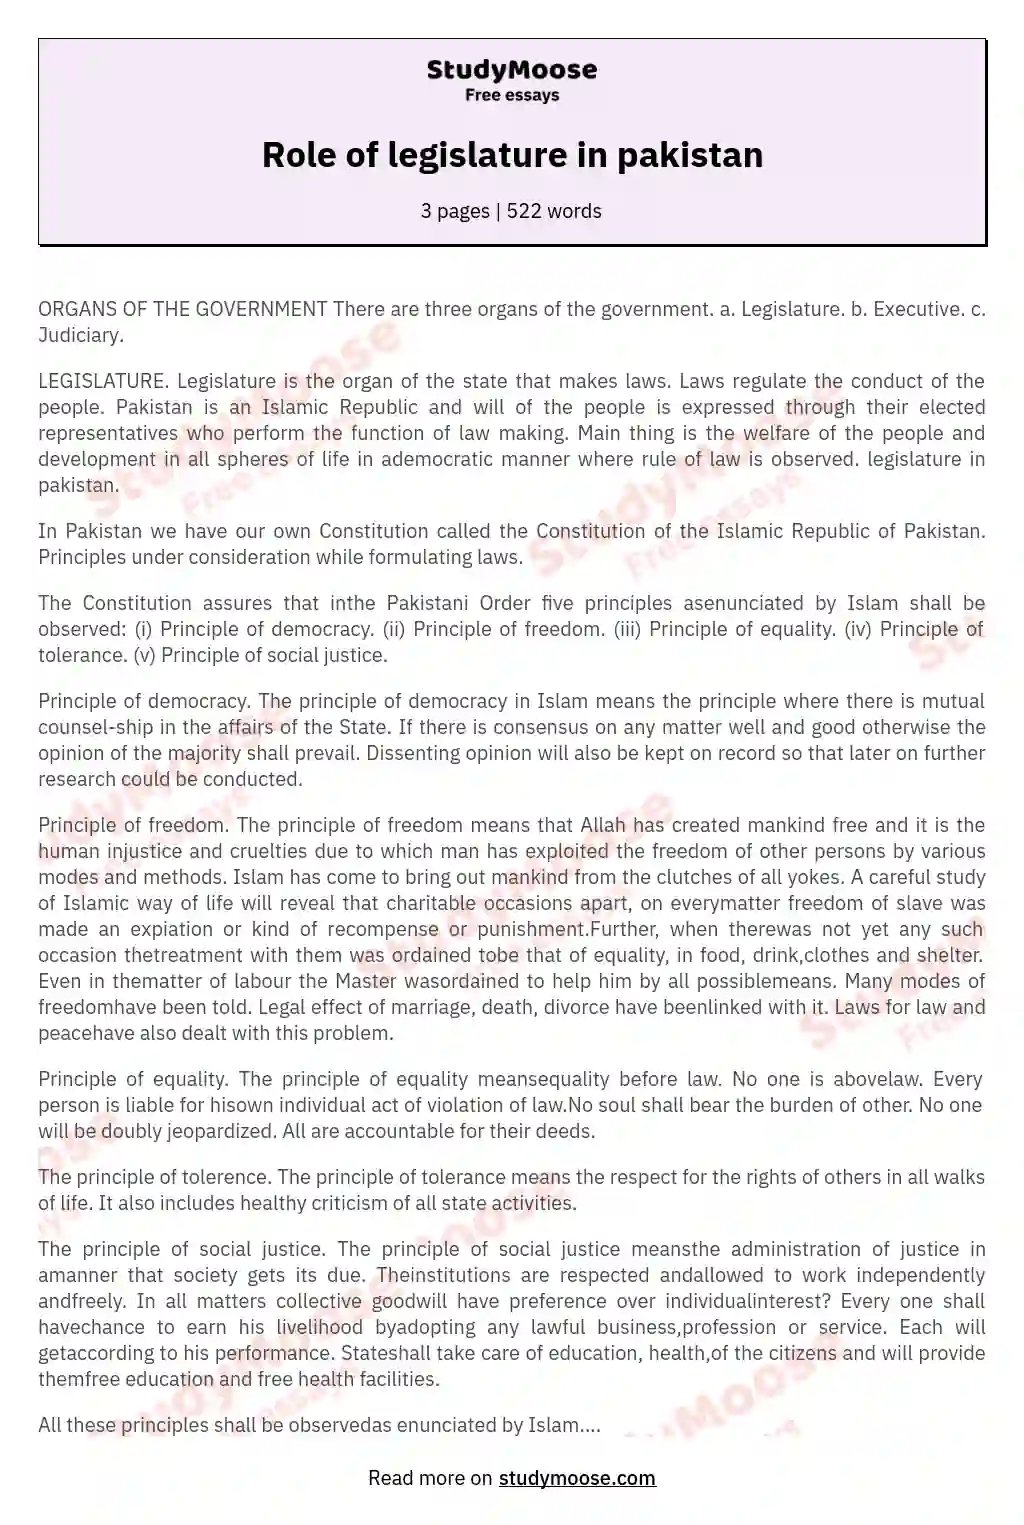 Role of legislature in pakistan essay